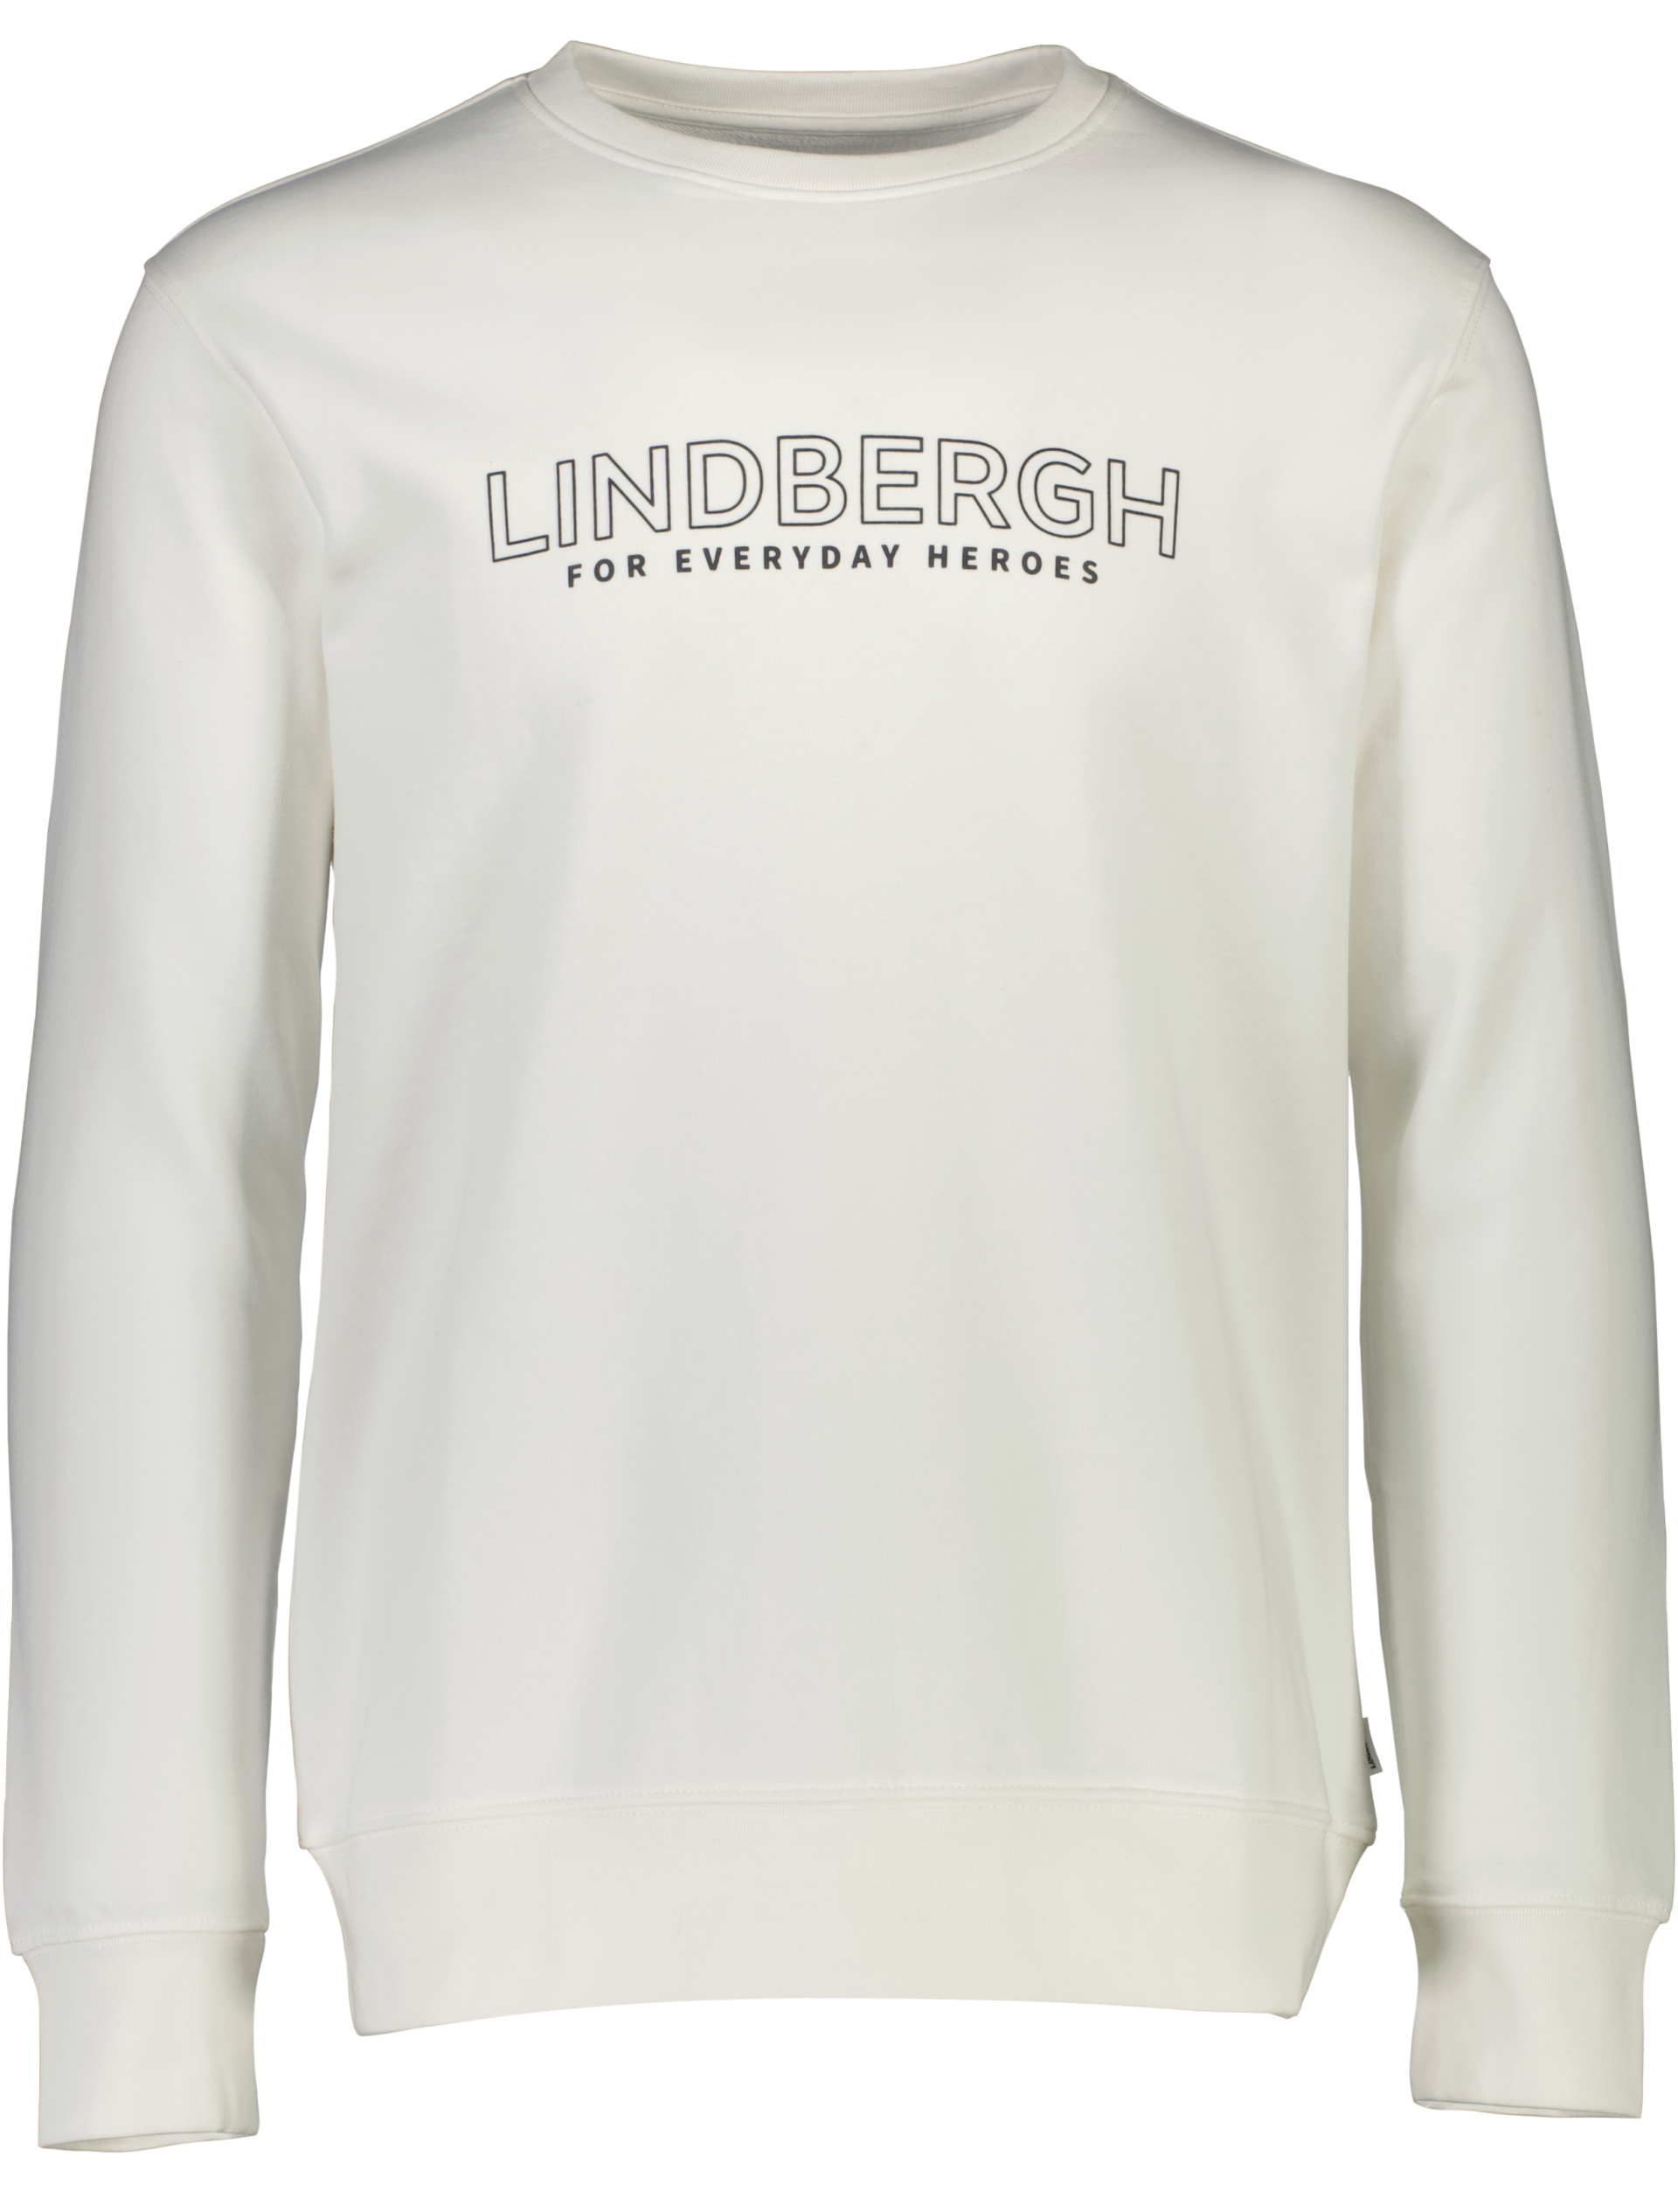 Lindbergh Sweatshirt weiss / off white